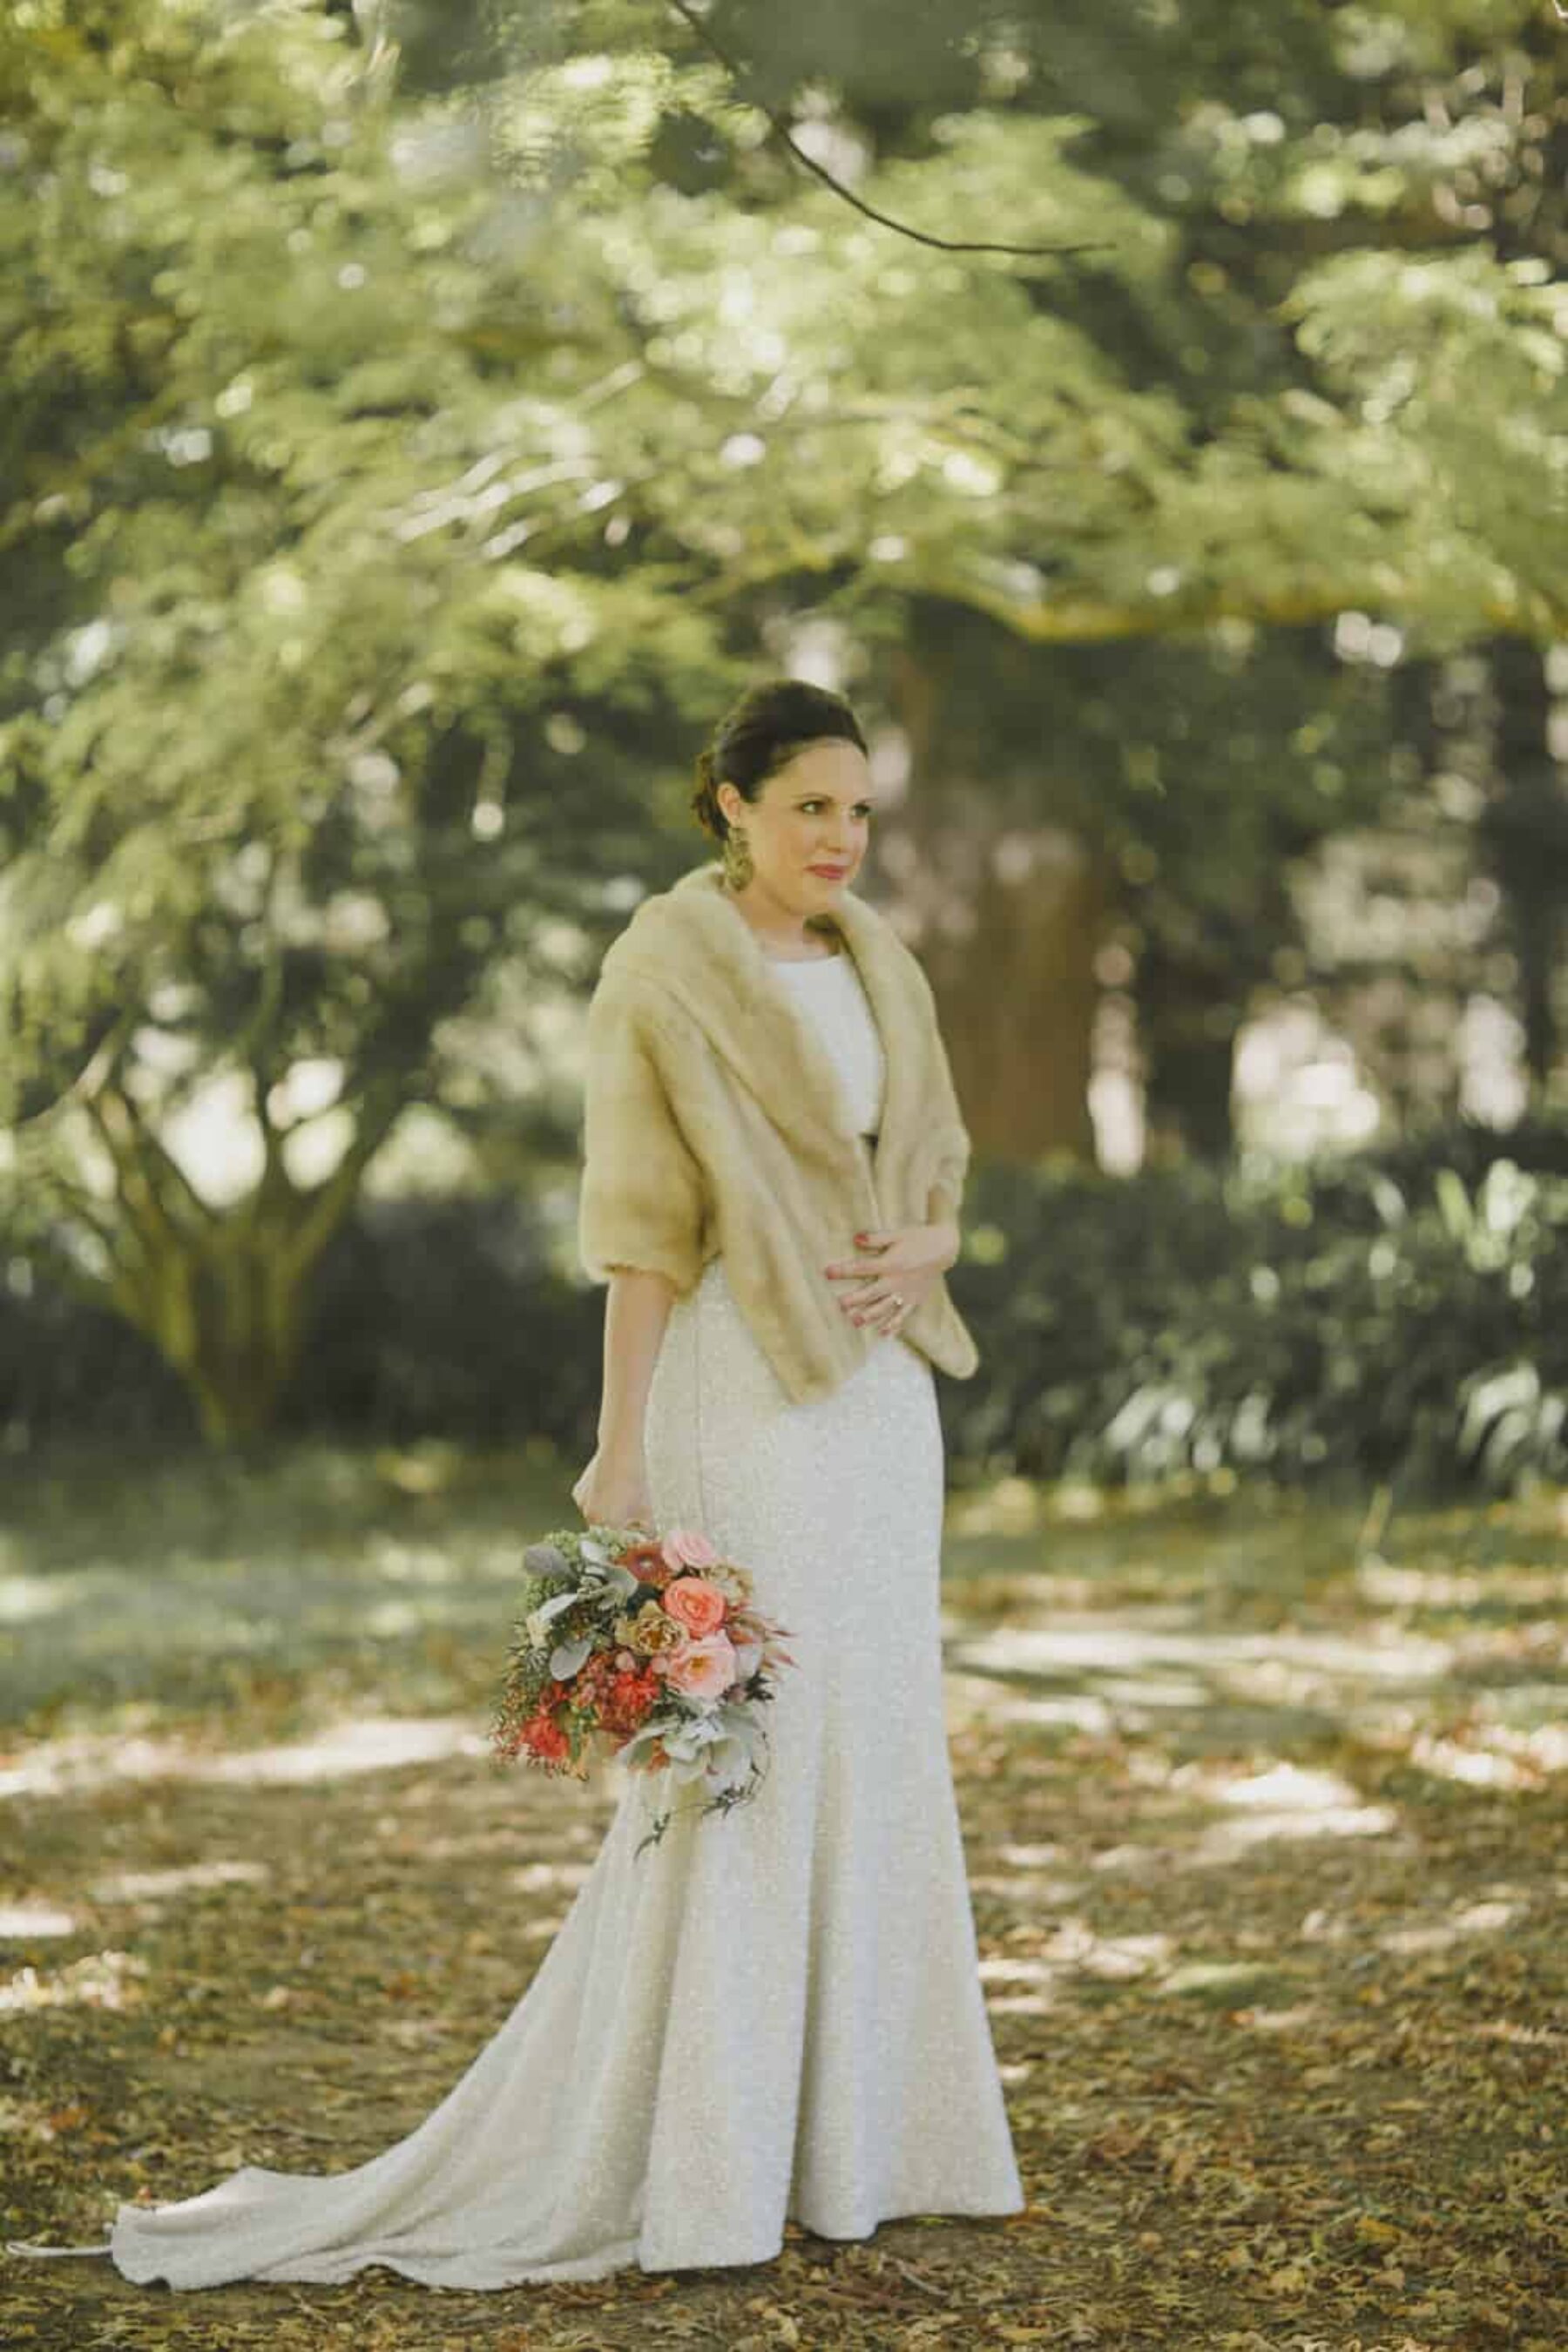 Suzanne Harward wedding dress with fur shrug / Nina Claire Photography